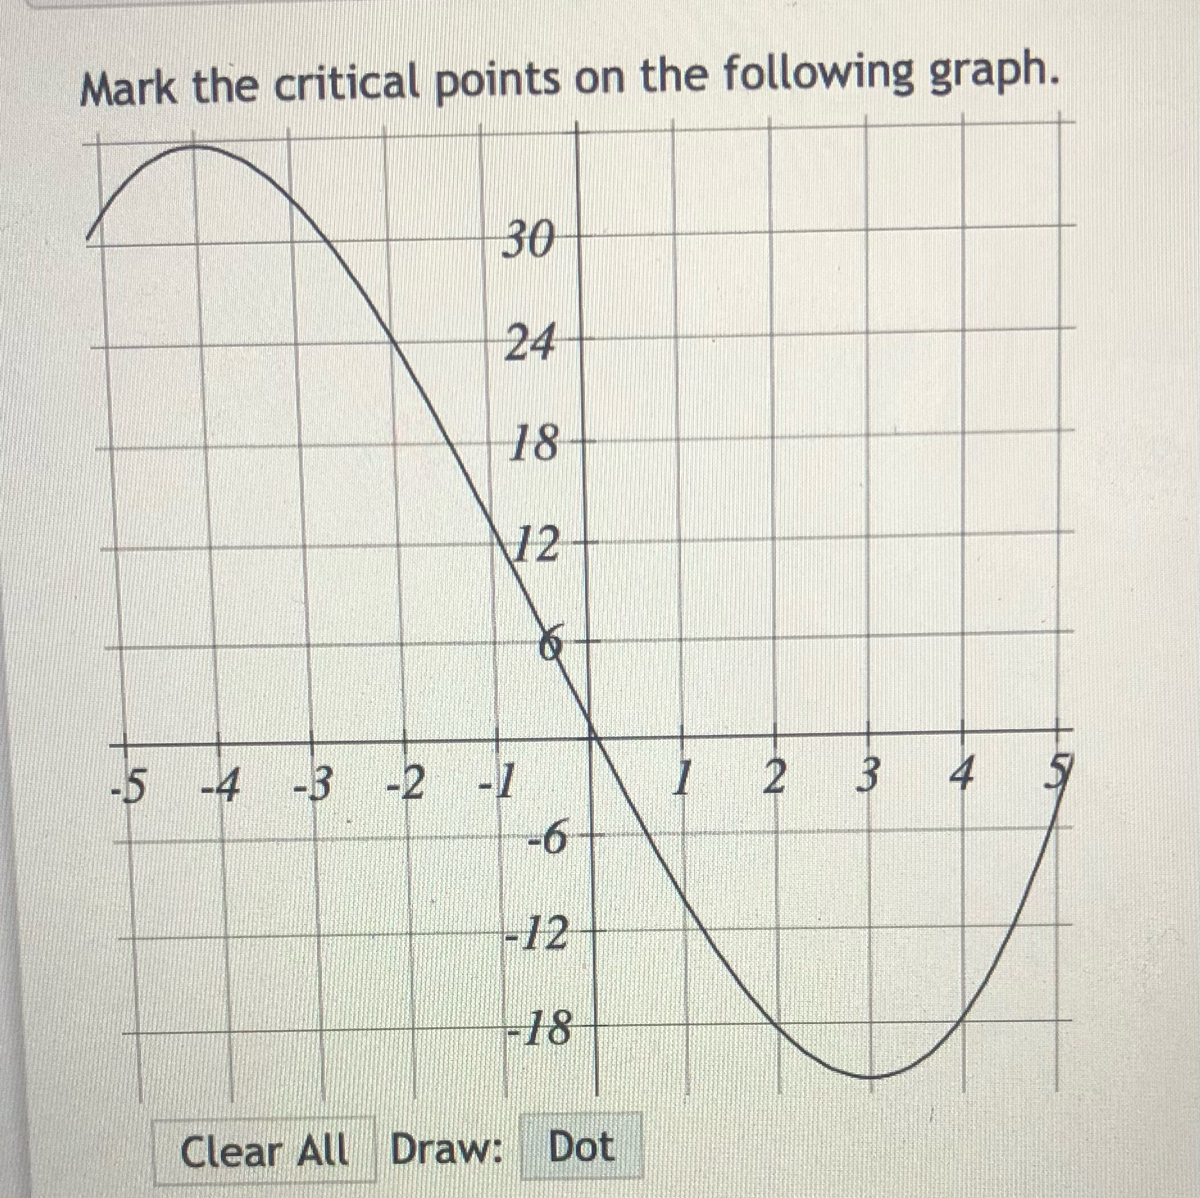 critical point graph